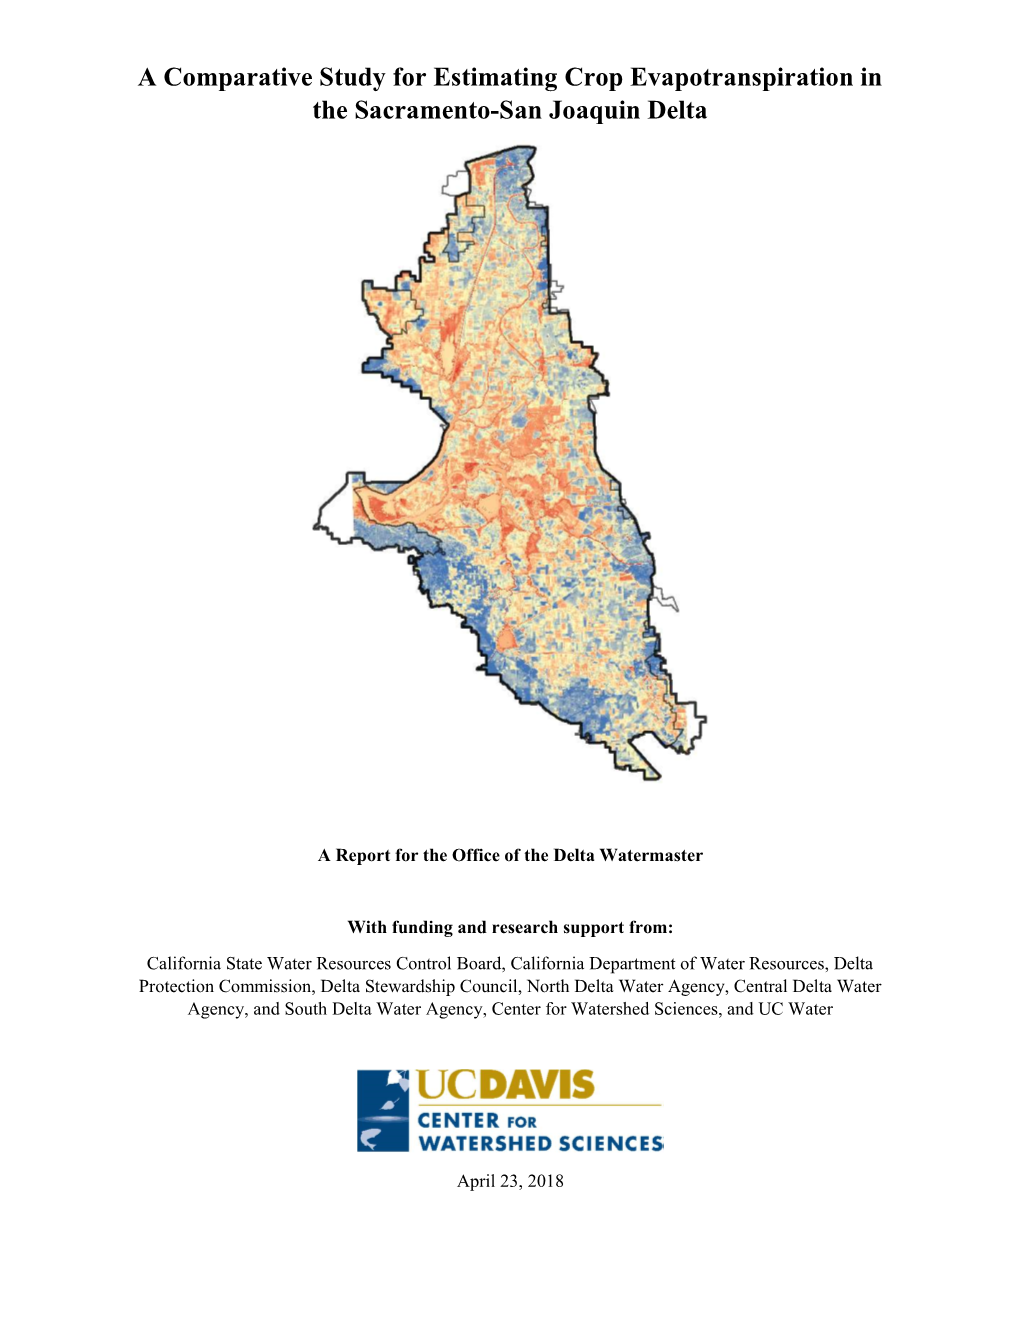 A Comparative Study for Estimating Crop Evapotranspiration in the Sacramento-San Joaquin Delta